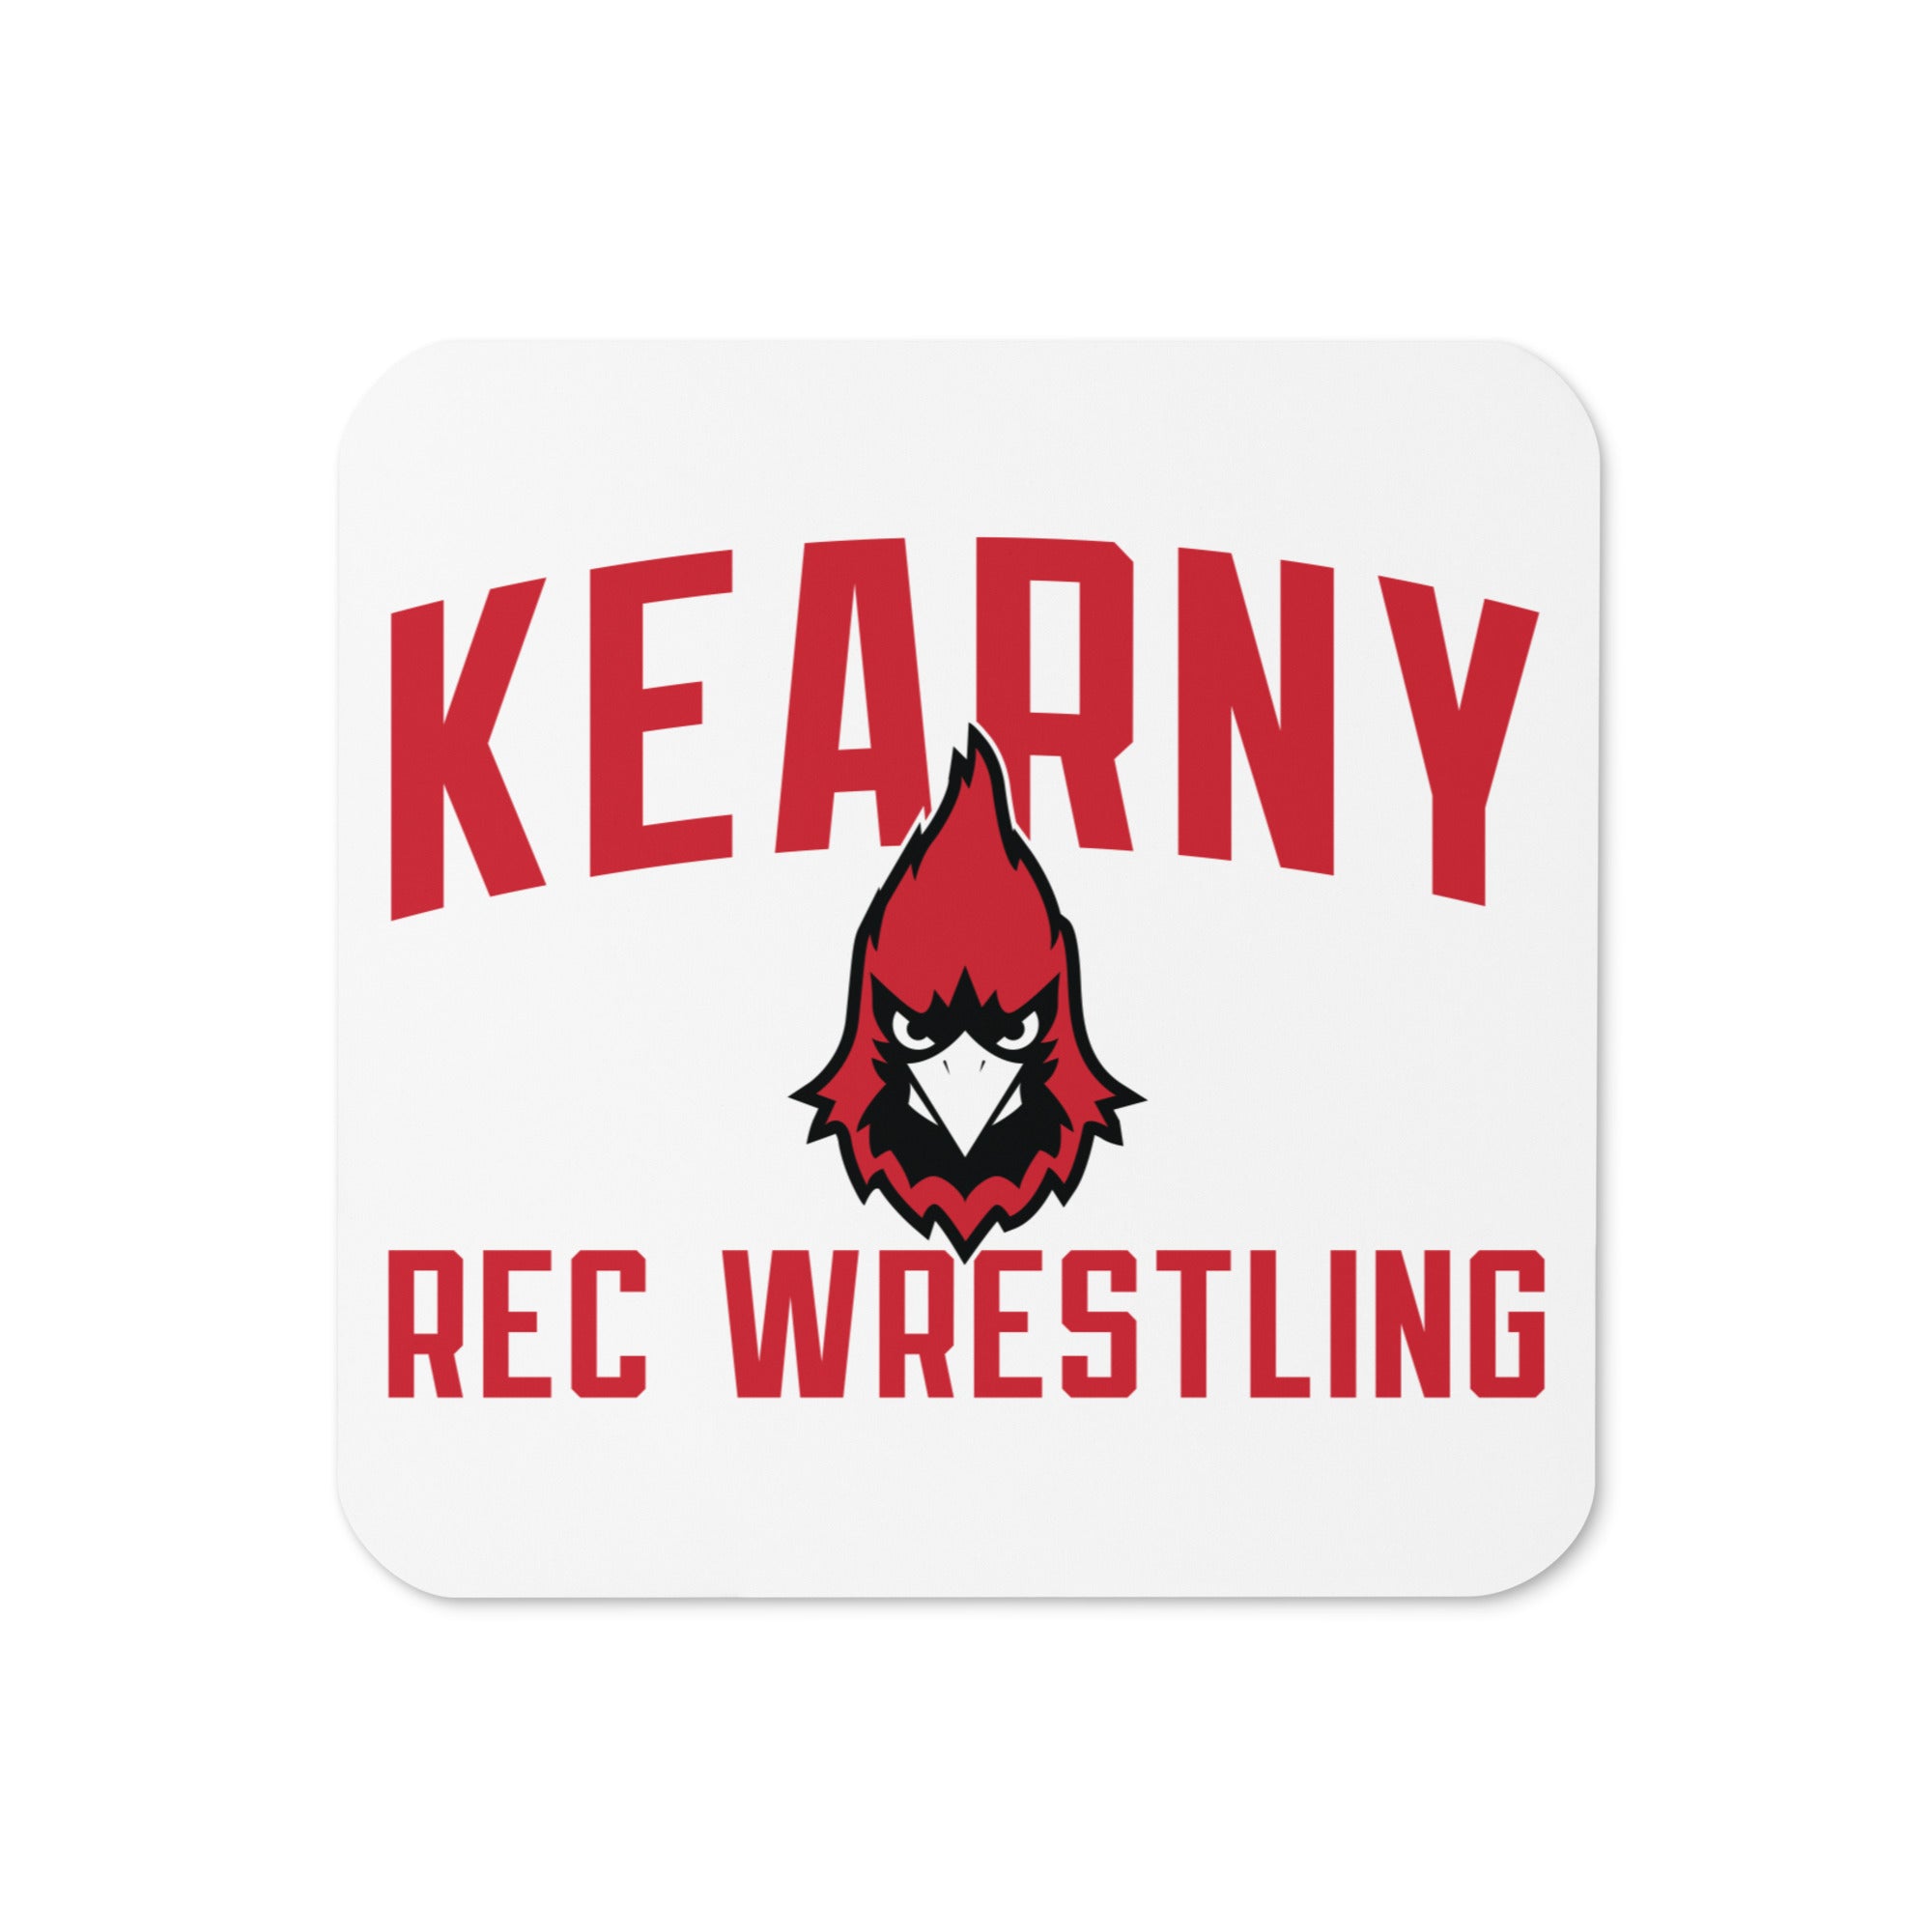 Kearny Rec Wrestling Cork Back Coaster